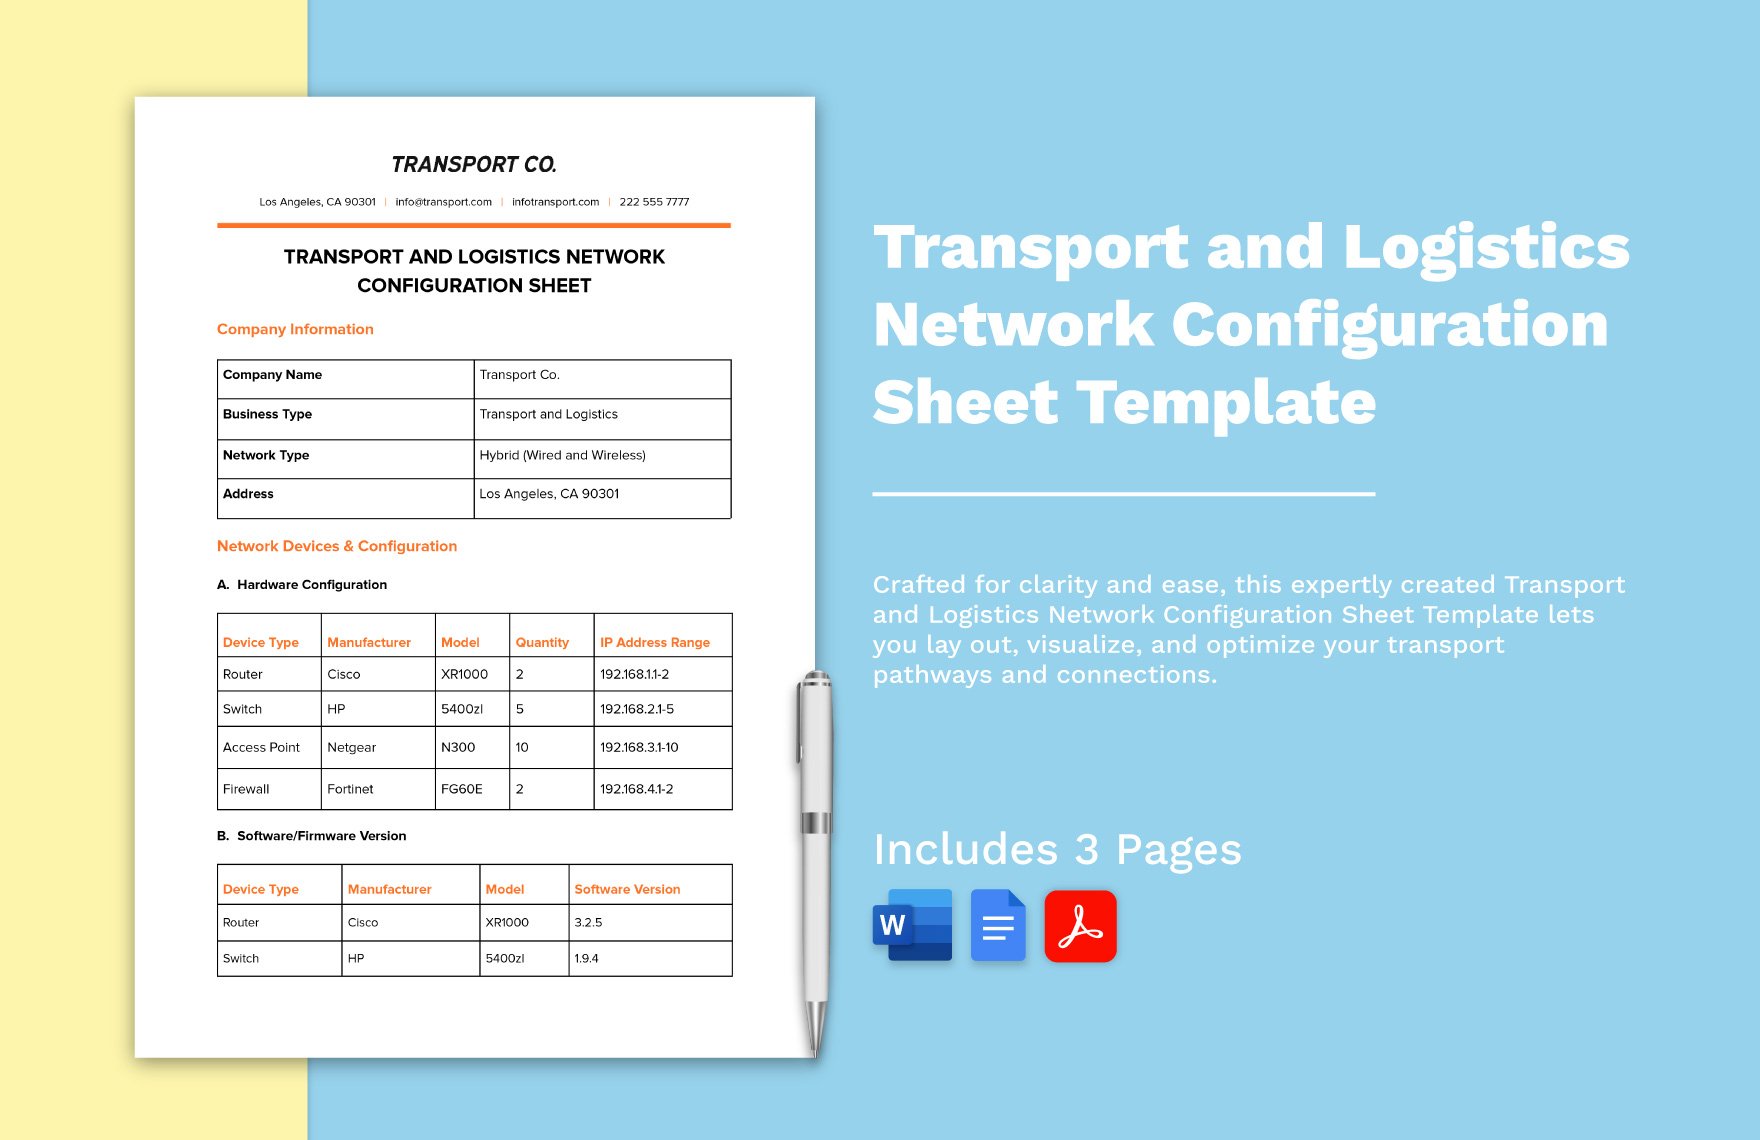 Transport and Logistics Network Configuration Sheet Template